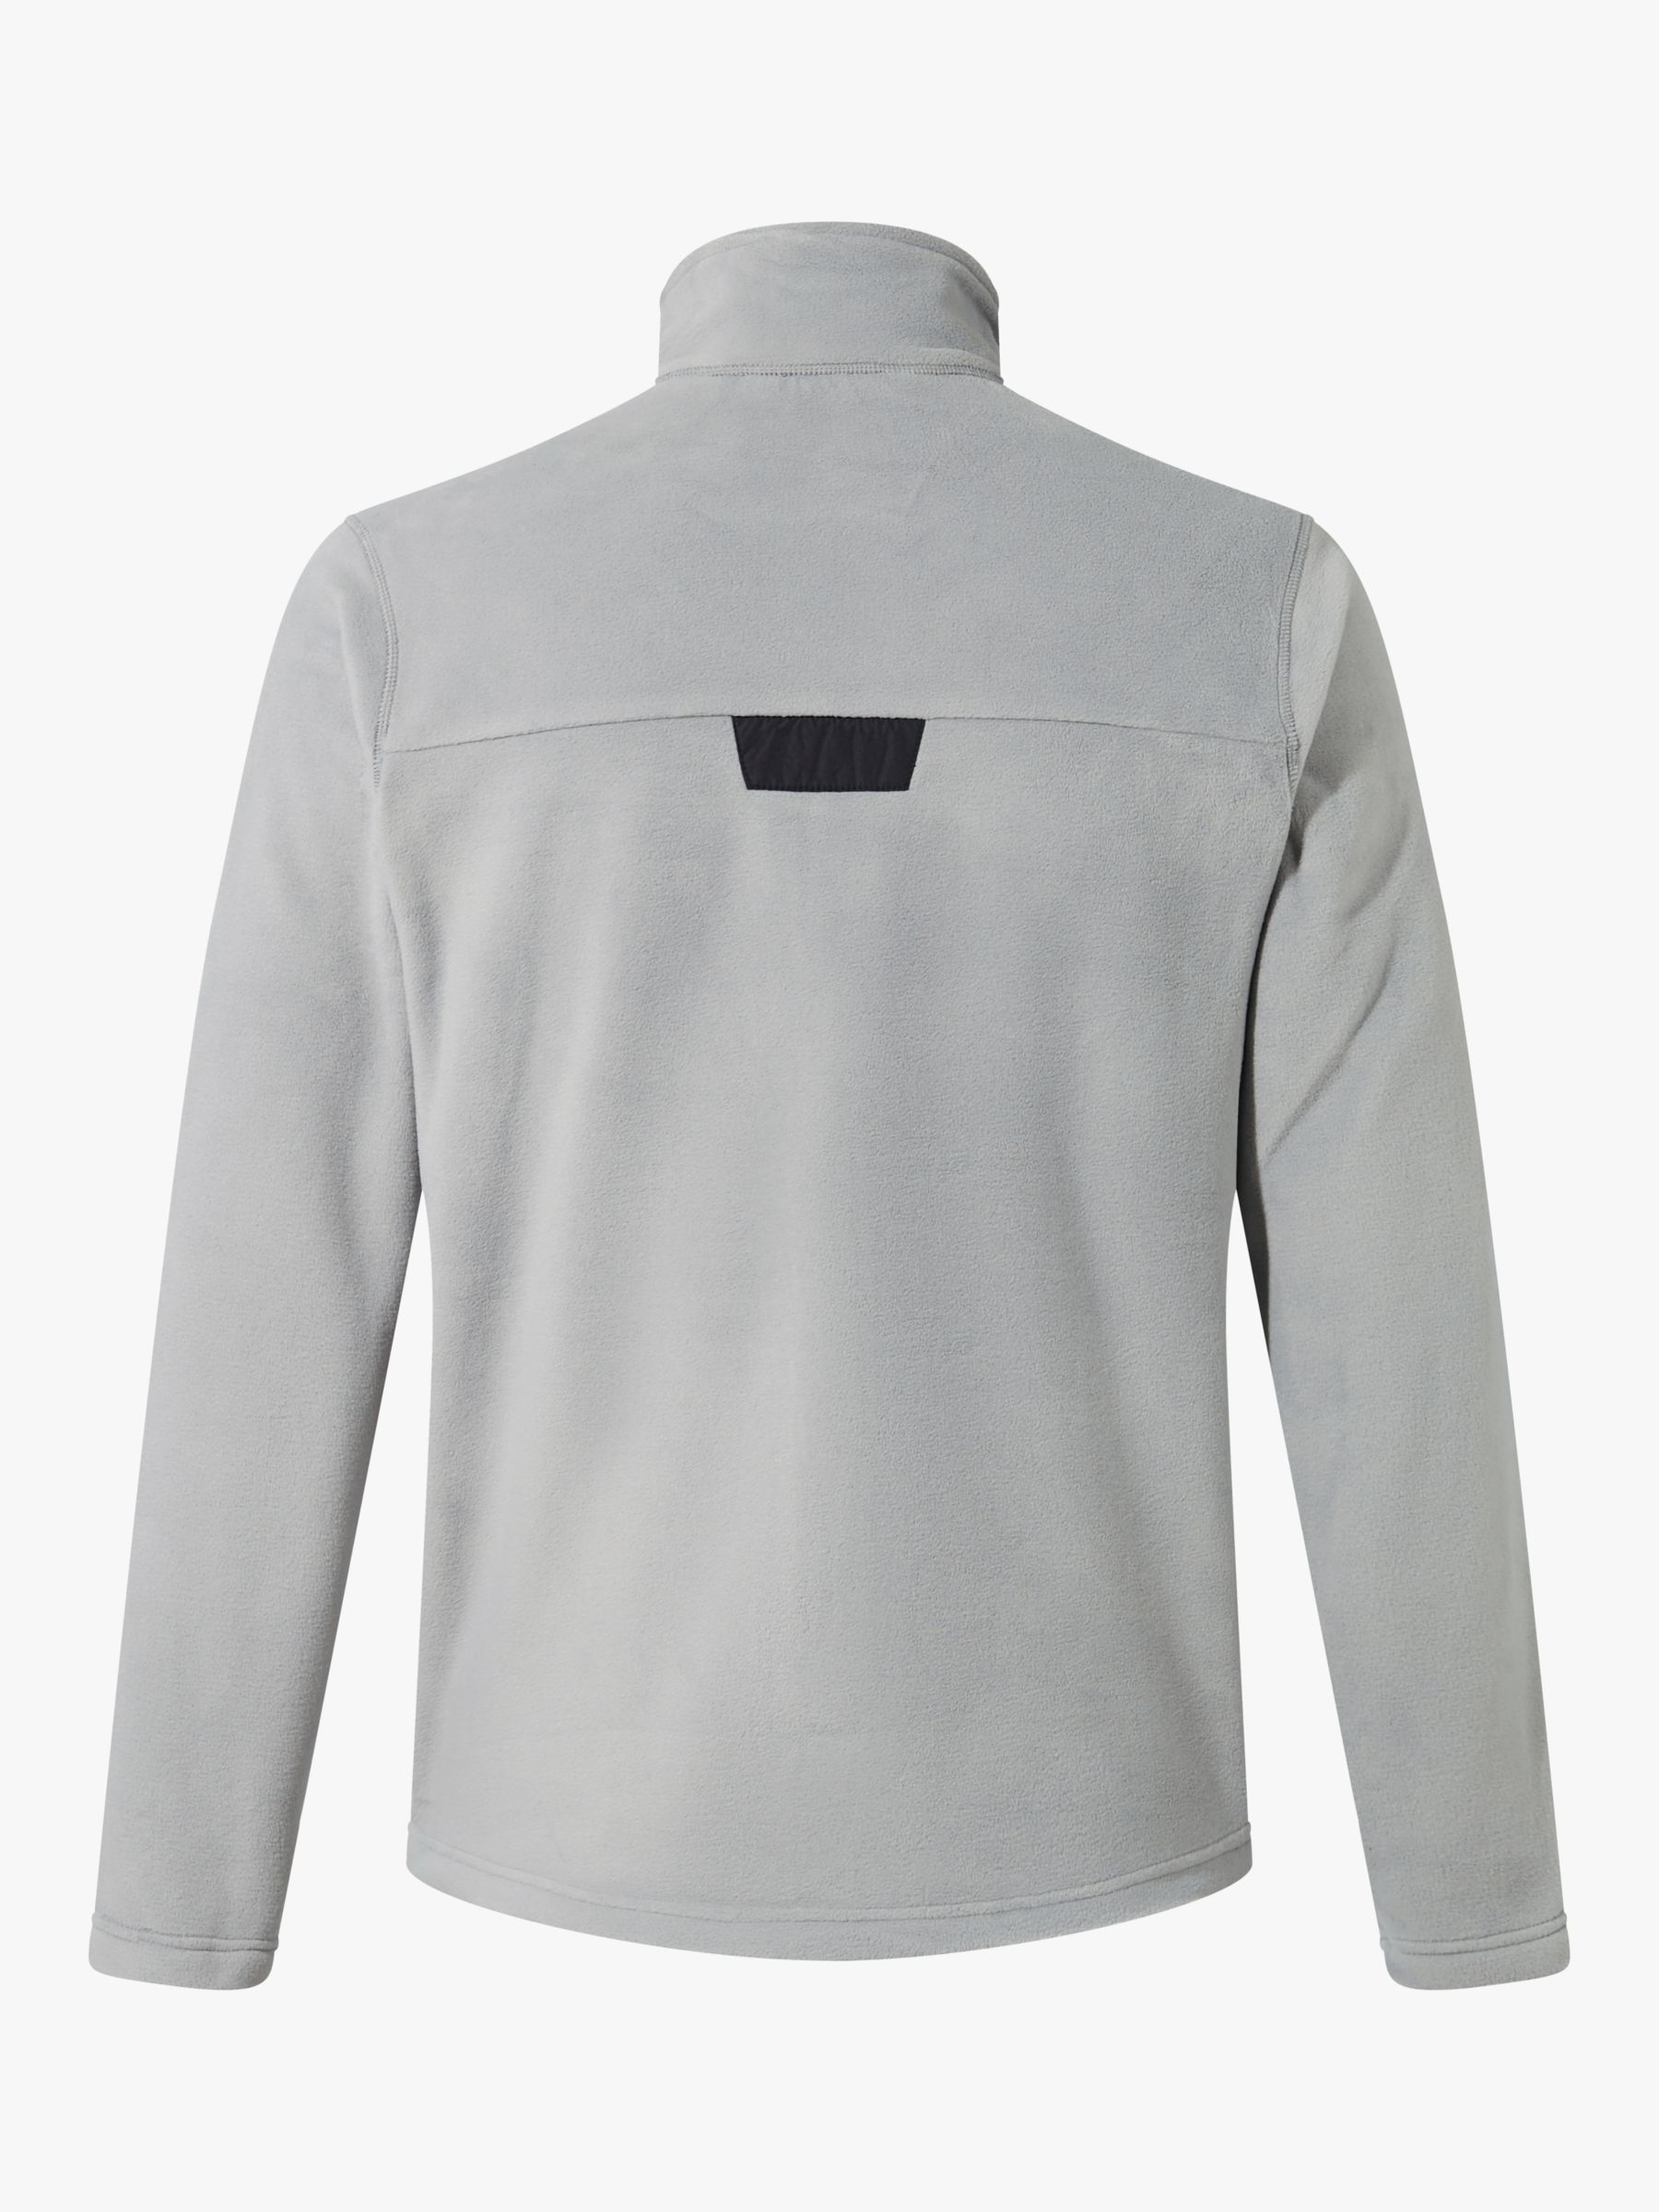 Buy Berghaus Men's Prism Fleece Top, Grey/Black Online at johnlewis.com